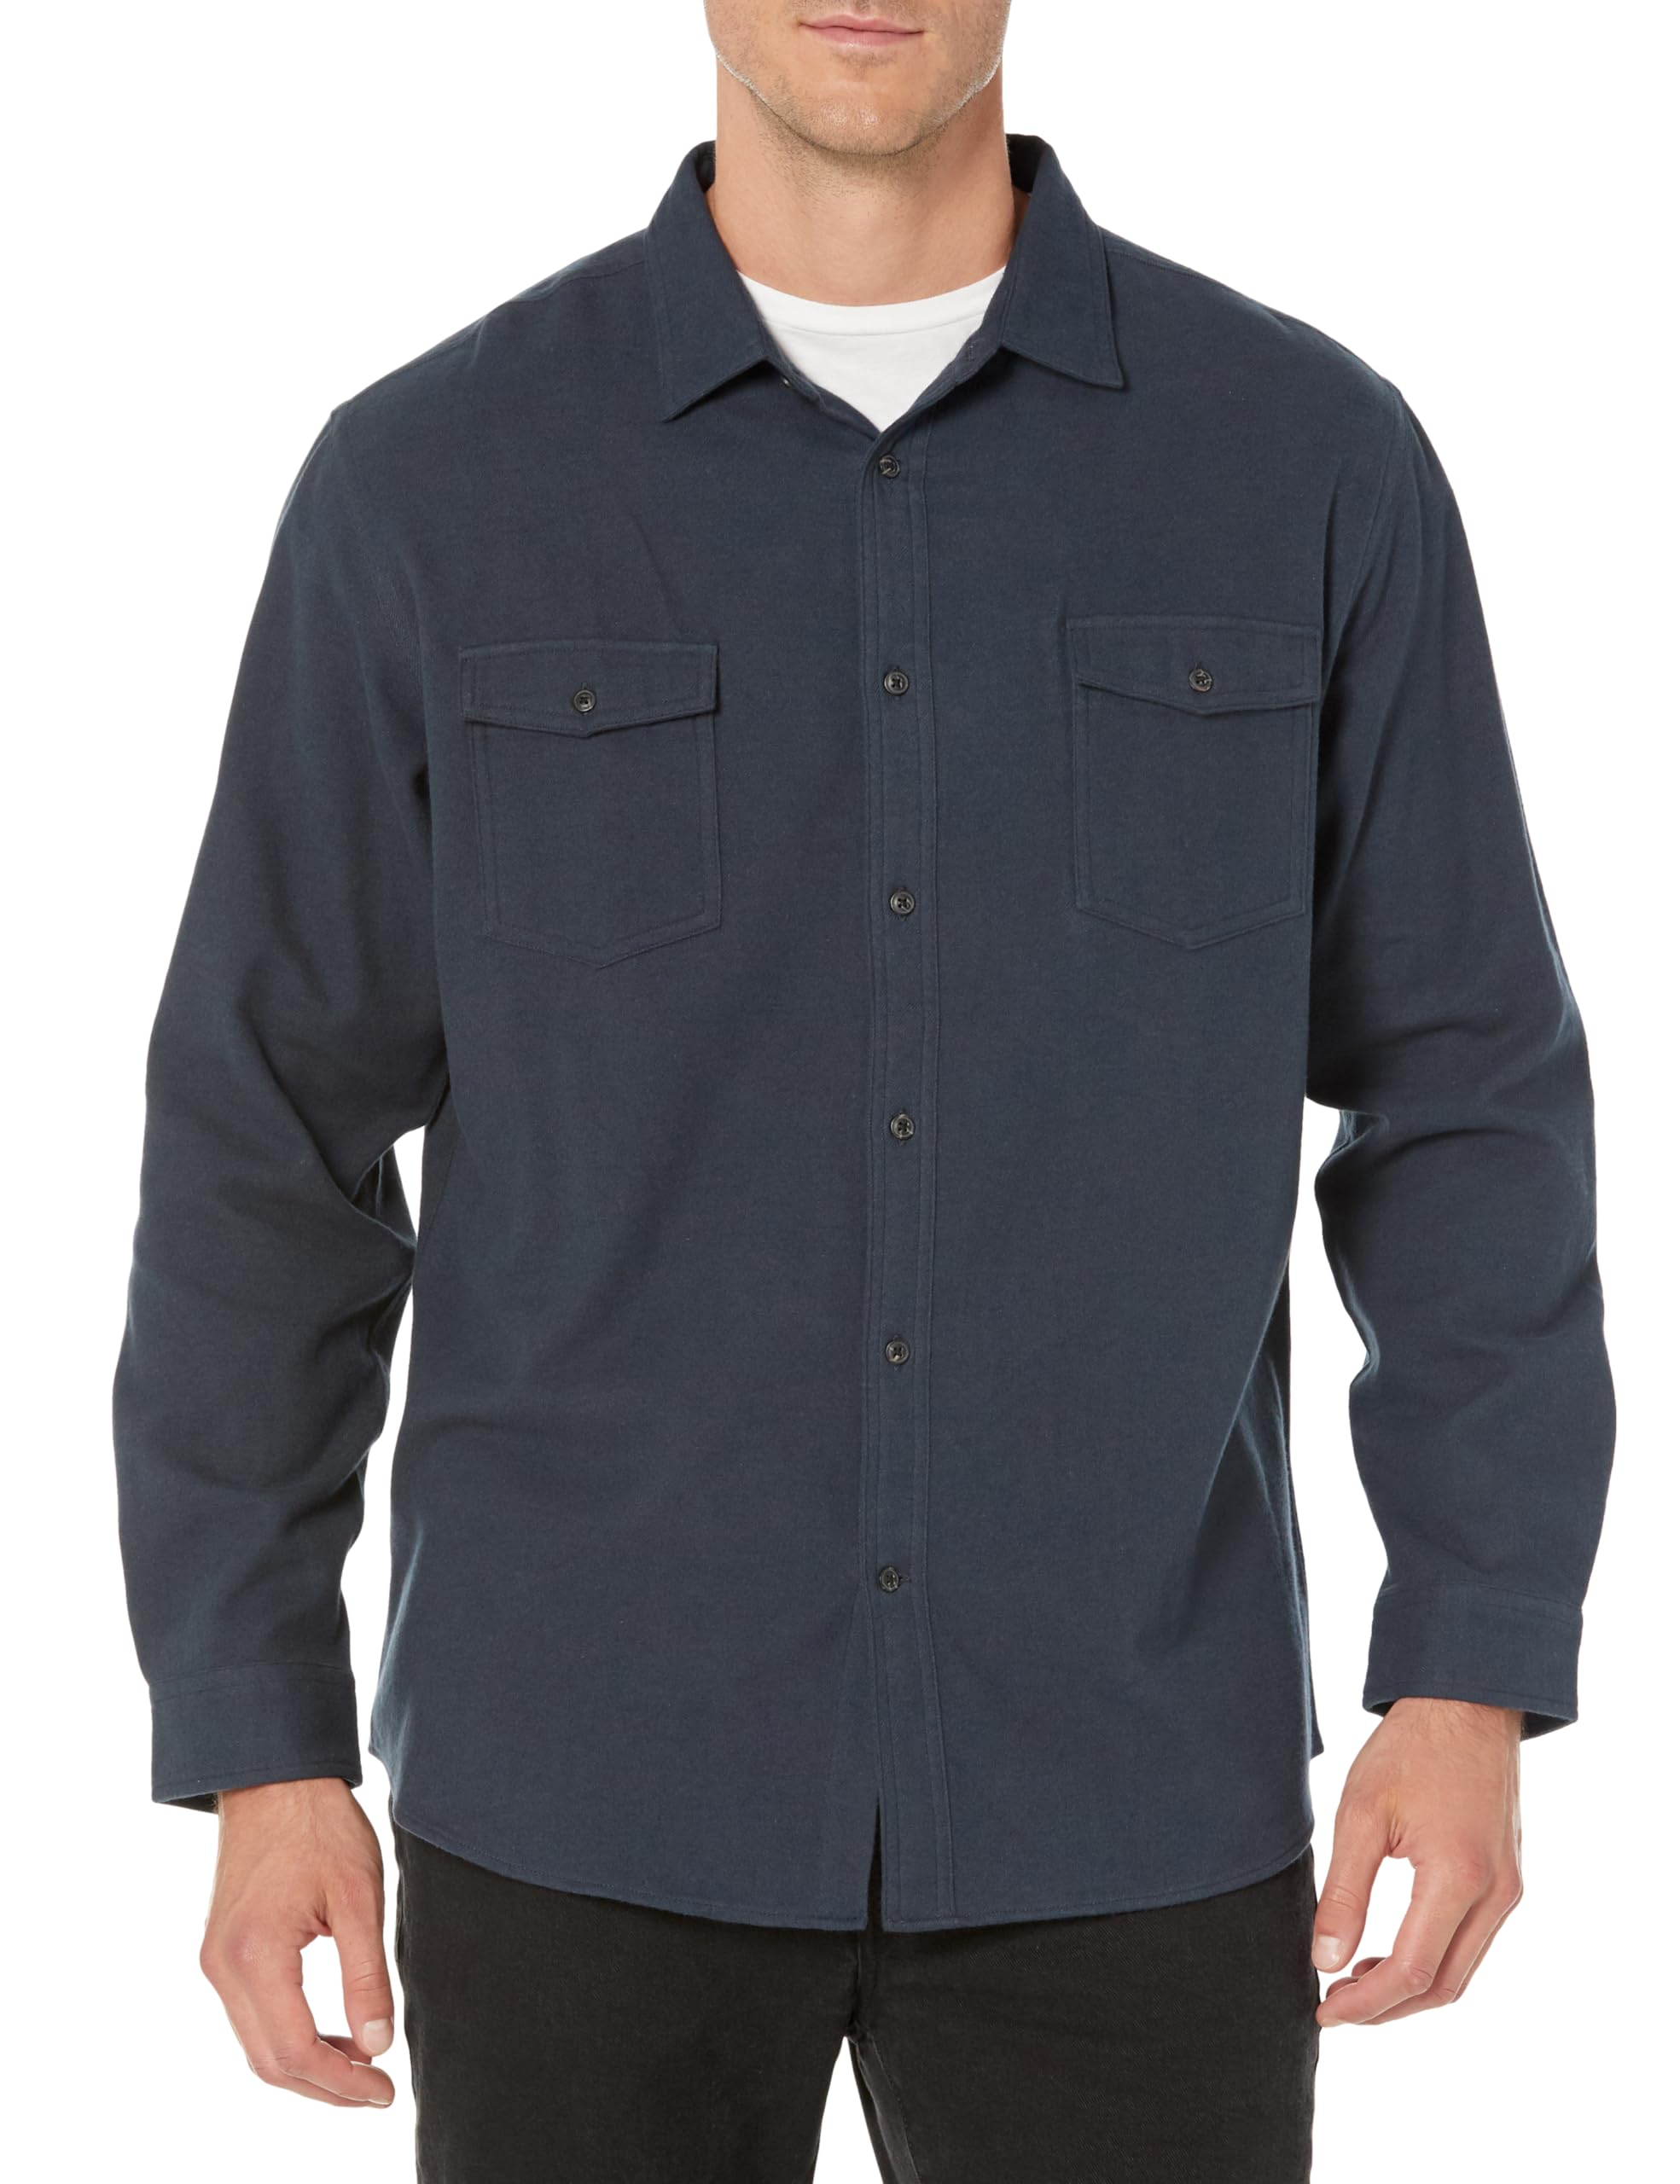 Amazon Essentials Men's Regular-Fit Long-Sleeve Two-Pocket Flannel Shirt